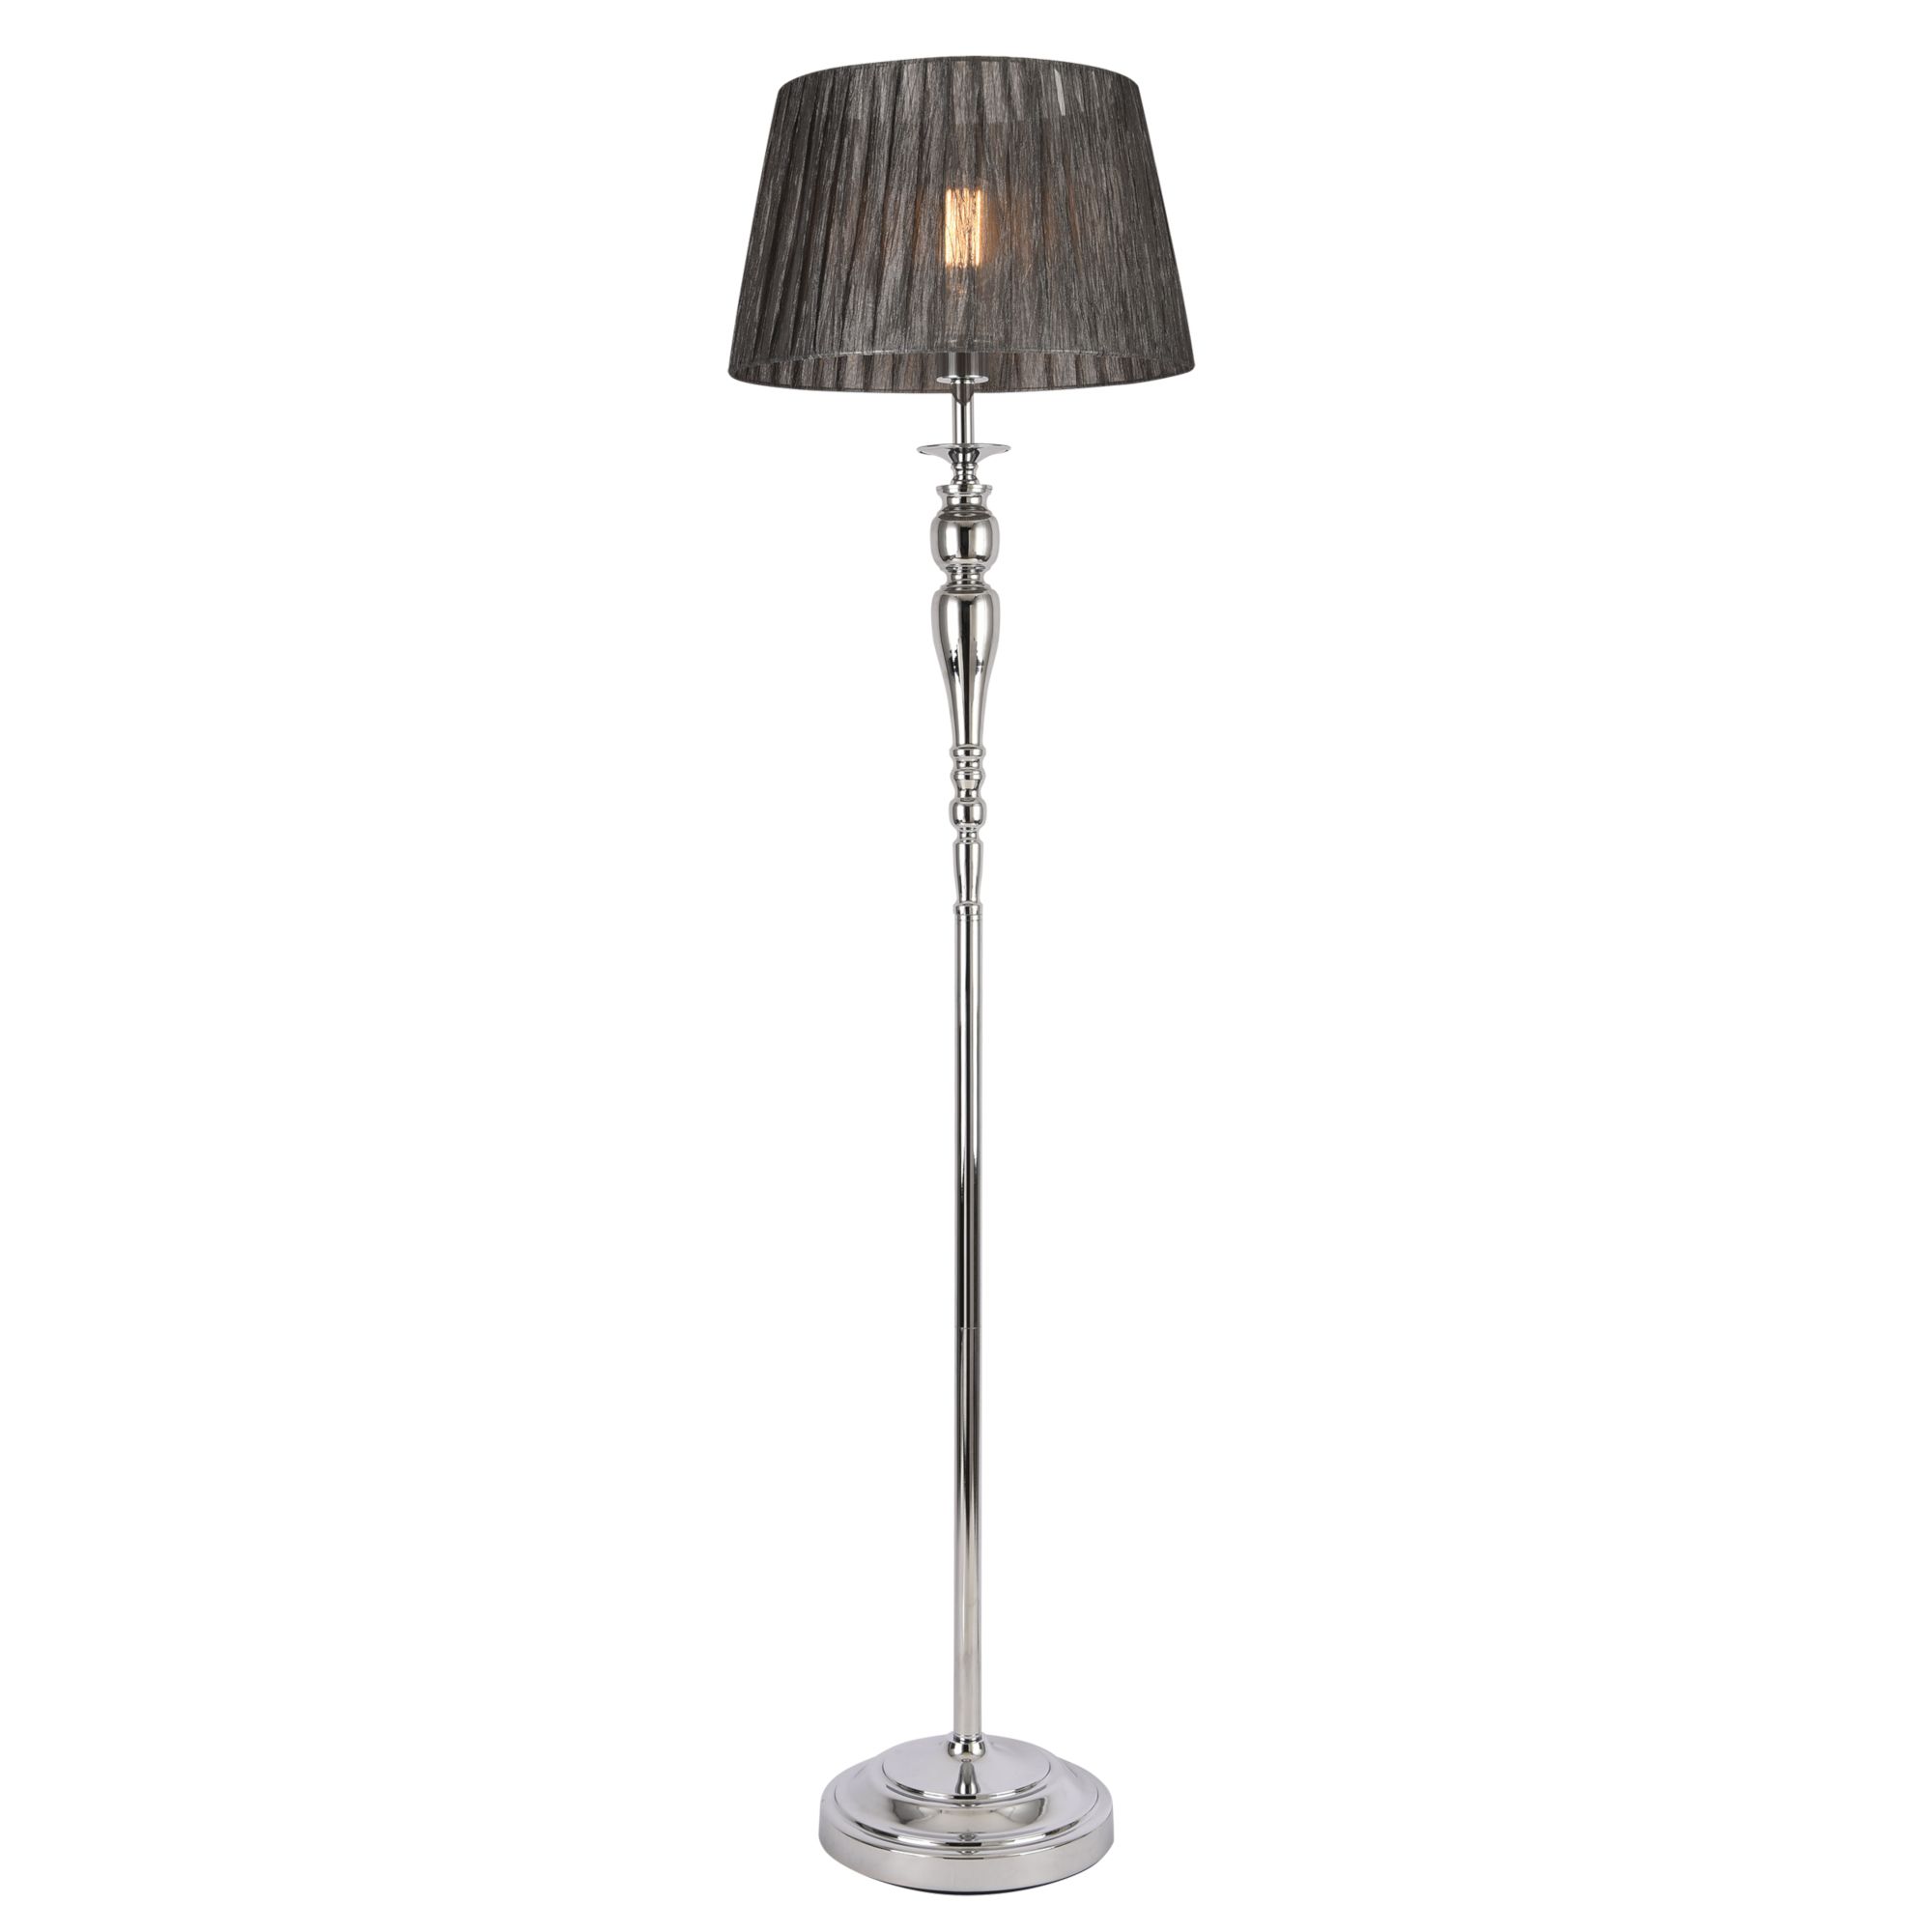 [lux.pro] Stojací lampa \"Lingen\" HT188123 - H.T. Trade Service GmbH & Co. KG